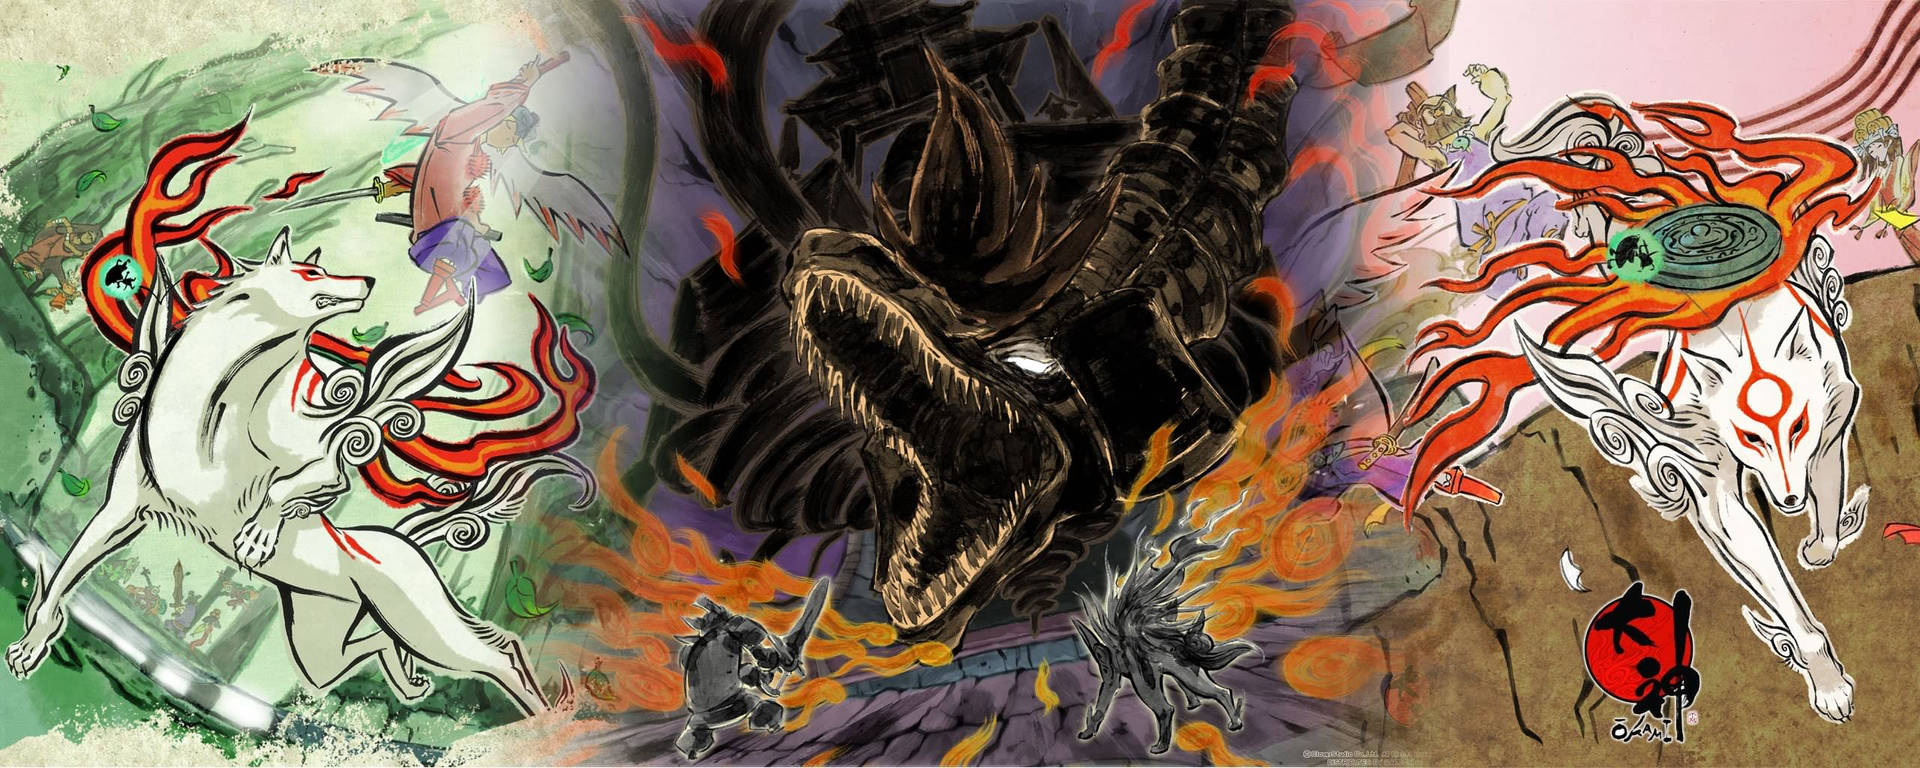 Okami Vs Black Dragon